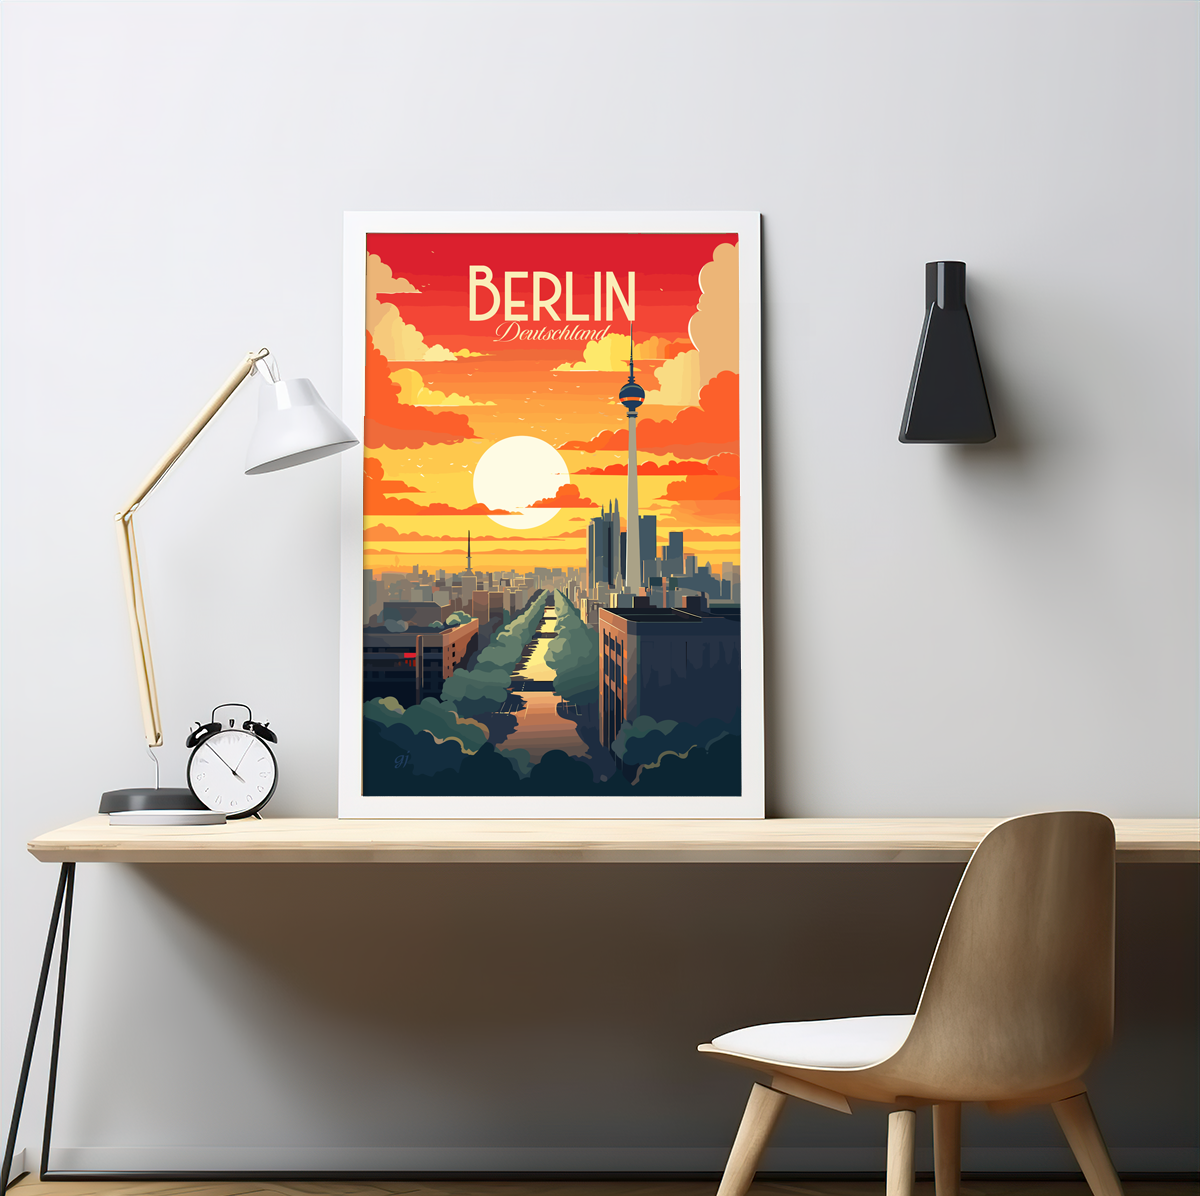 Berlin poster by bon voyage design